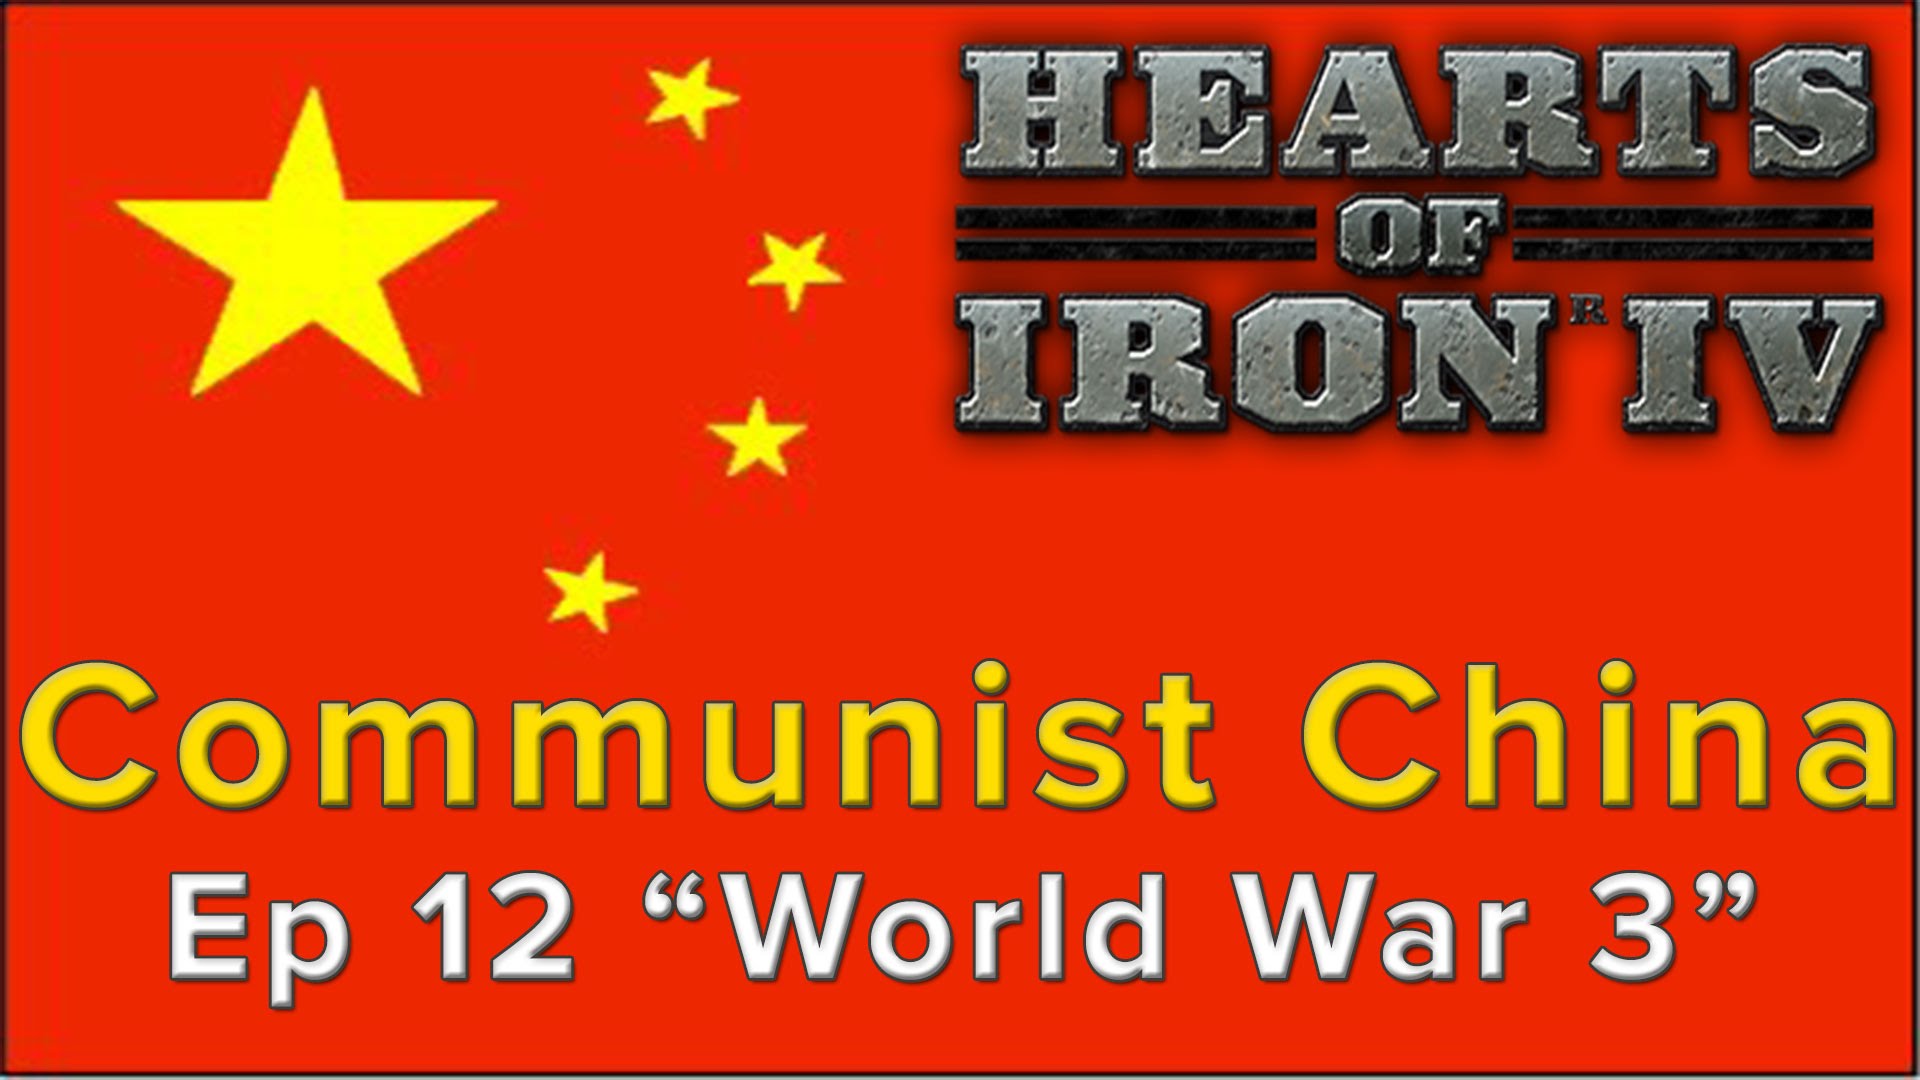 Hearts of Iron 4: Communist China Episode 12 – “World War 3”